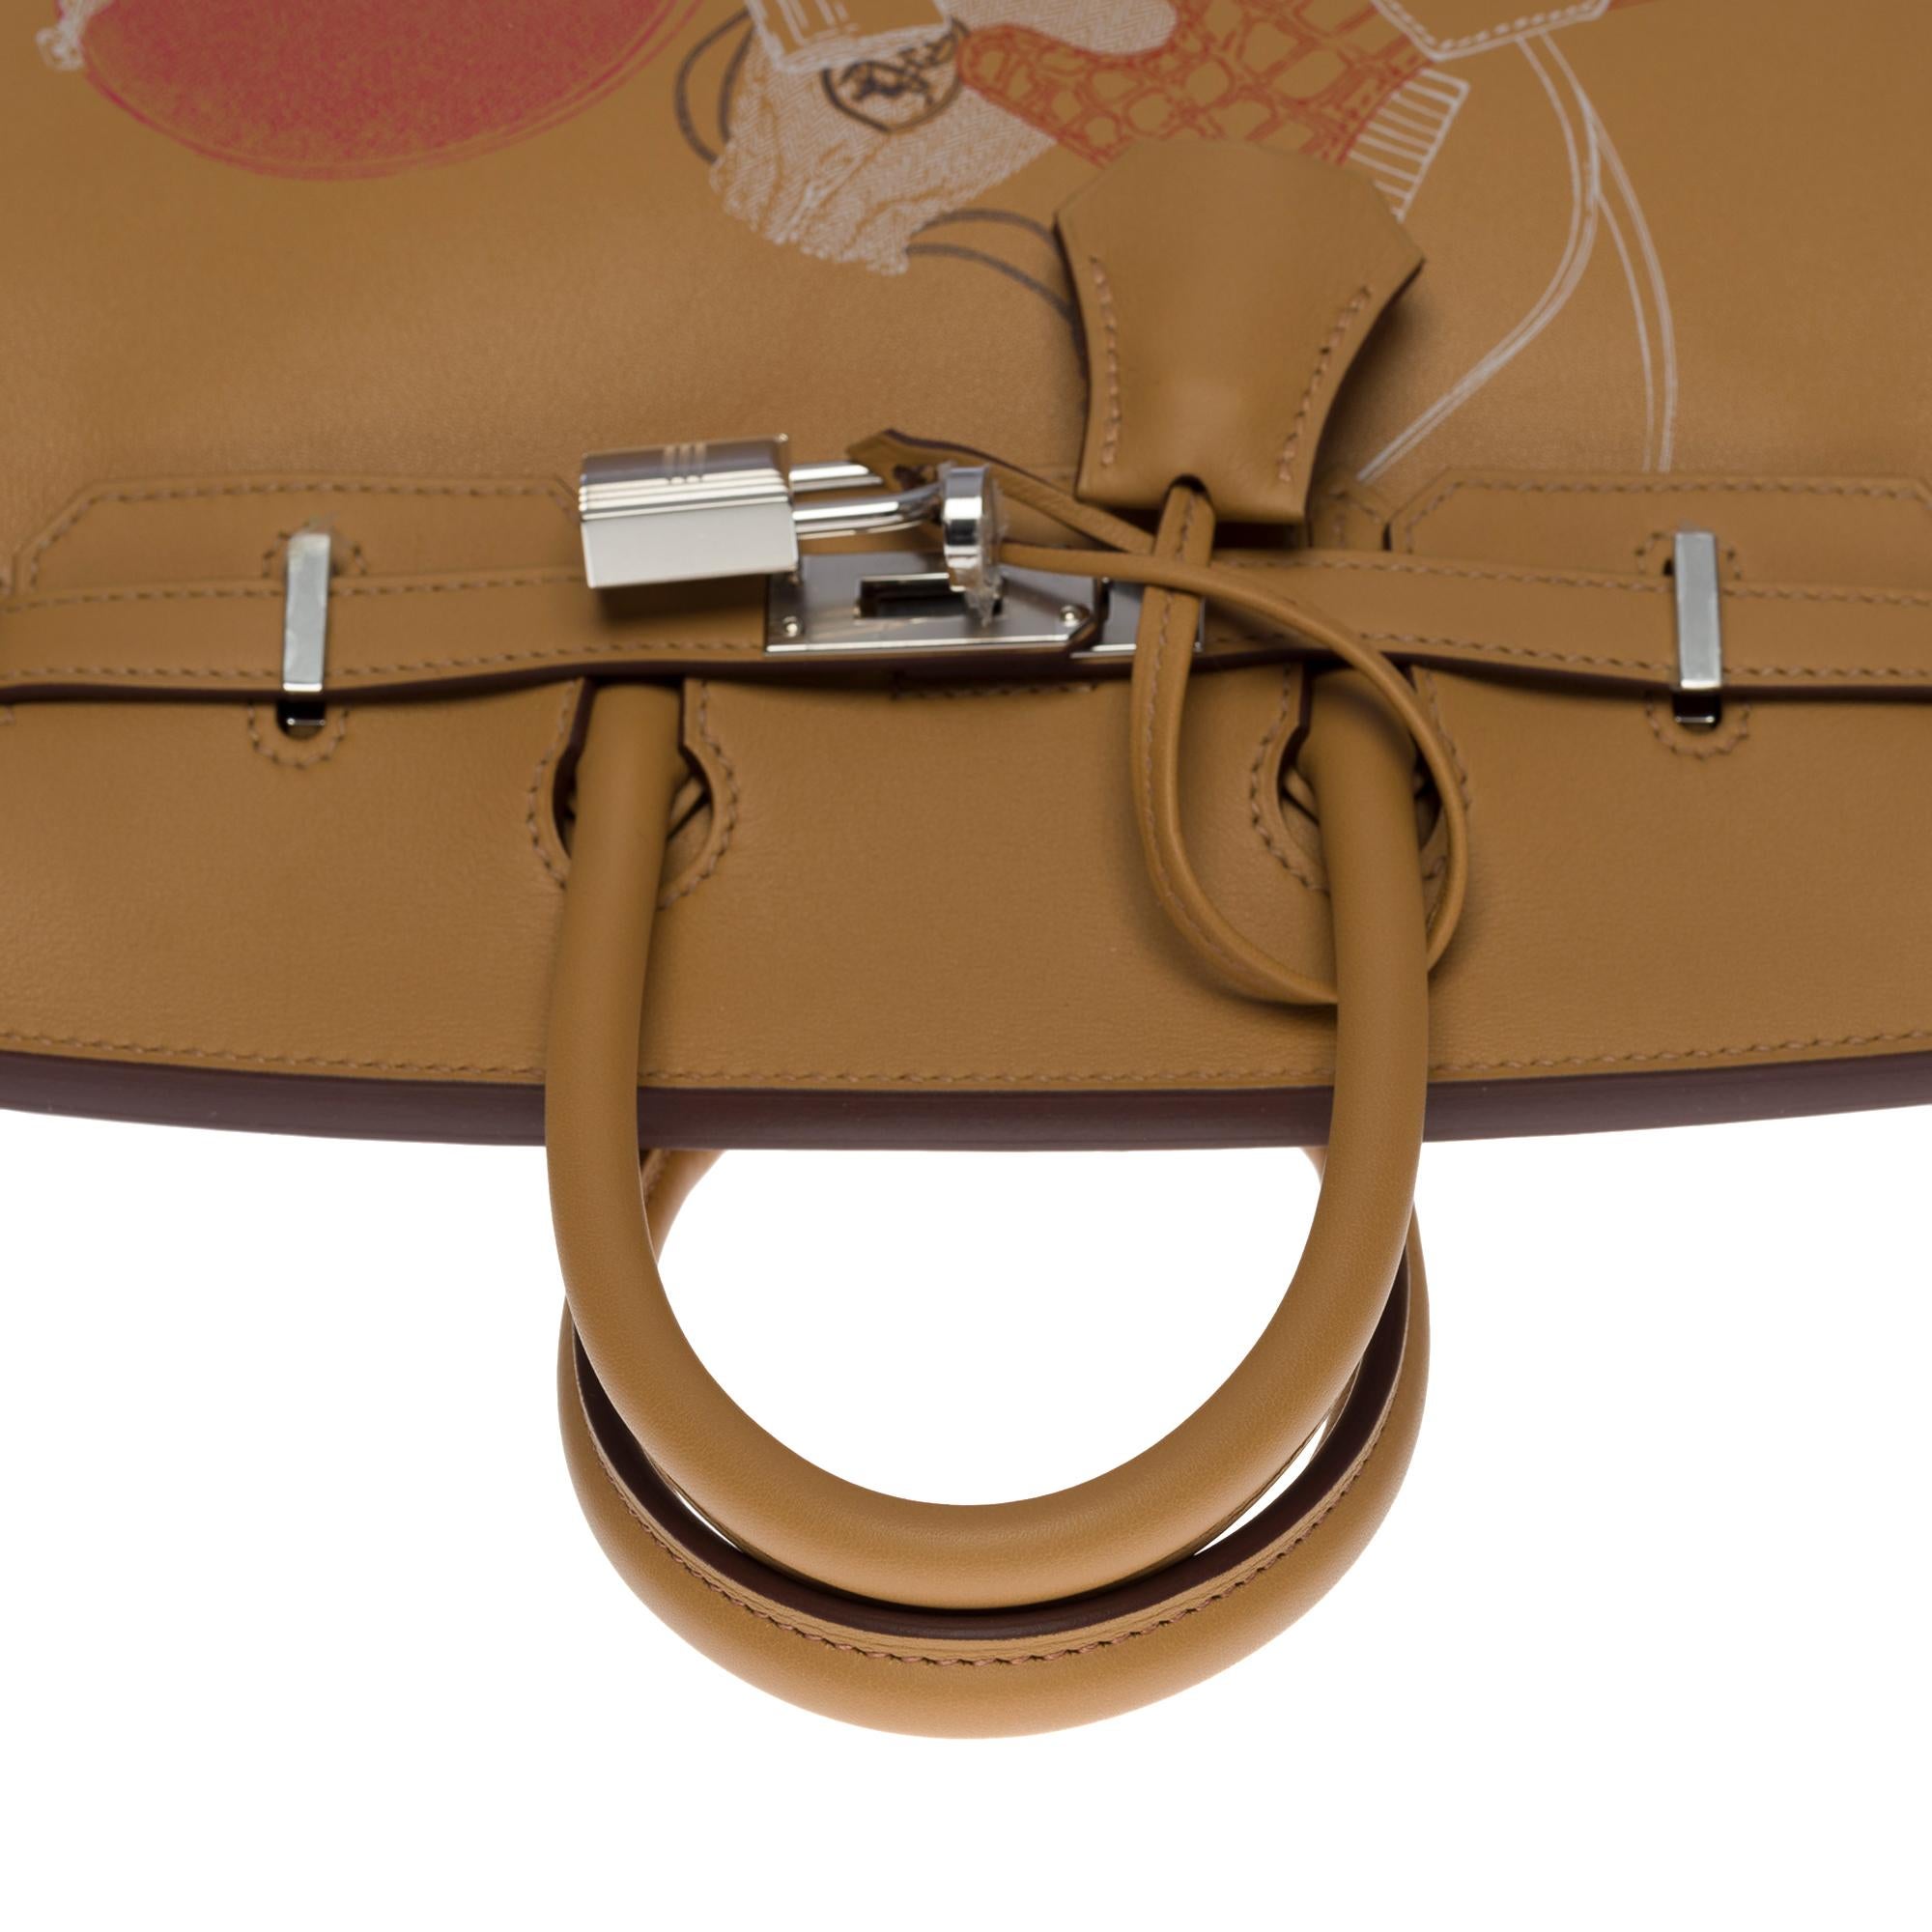  Fantastic Hermes Birkin 25cm handbag Biscuit In & Out Limited Edition Swift PHW For Sale 4